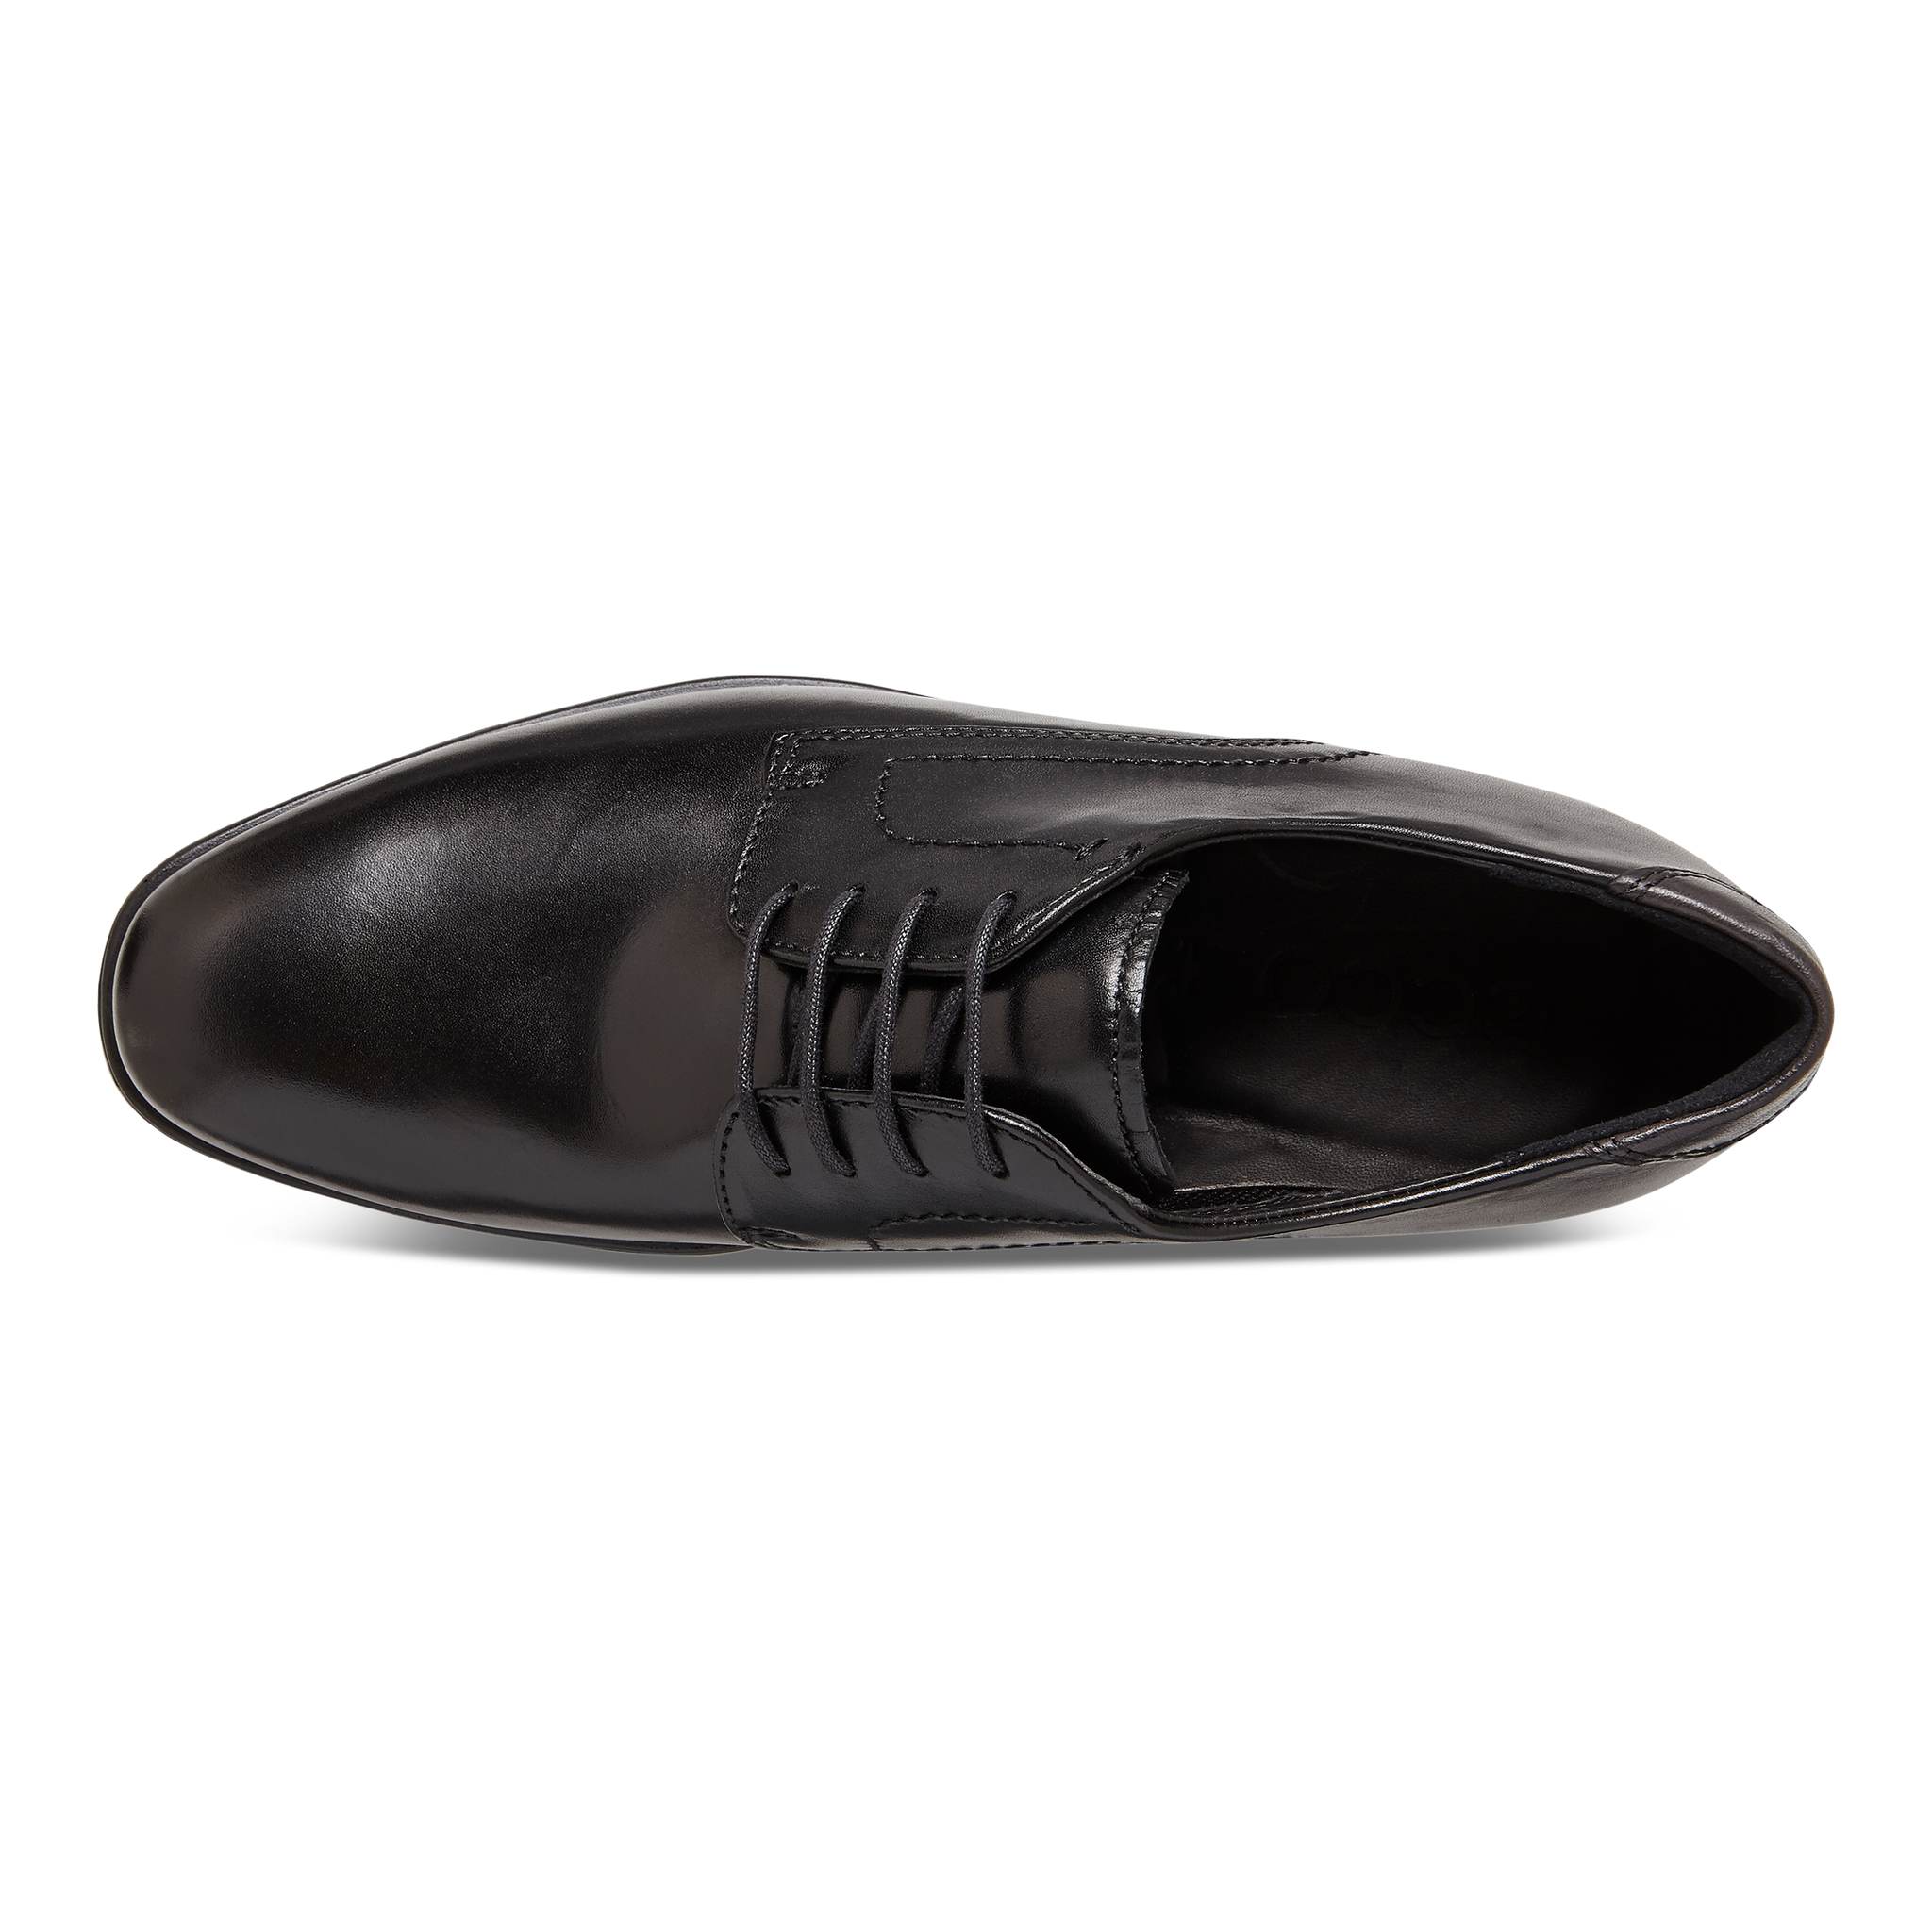 ECCO Melbourne (621634)- Men's Formal Shoe in Black | ECCO Shoes |Wisemans | Bantry | Shoe Shop | West Cork | Ireland